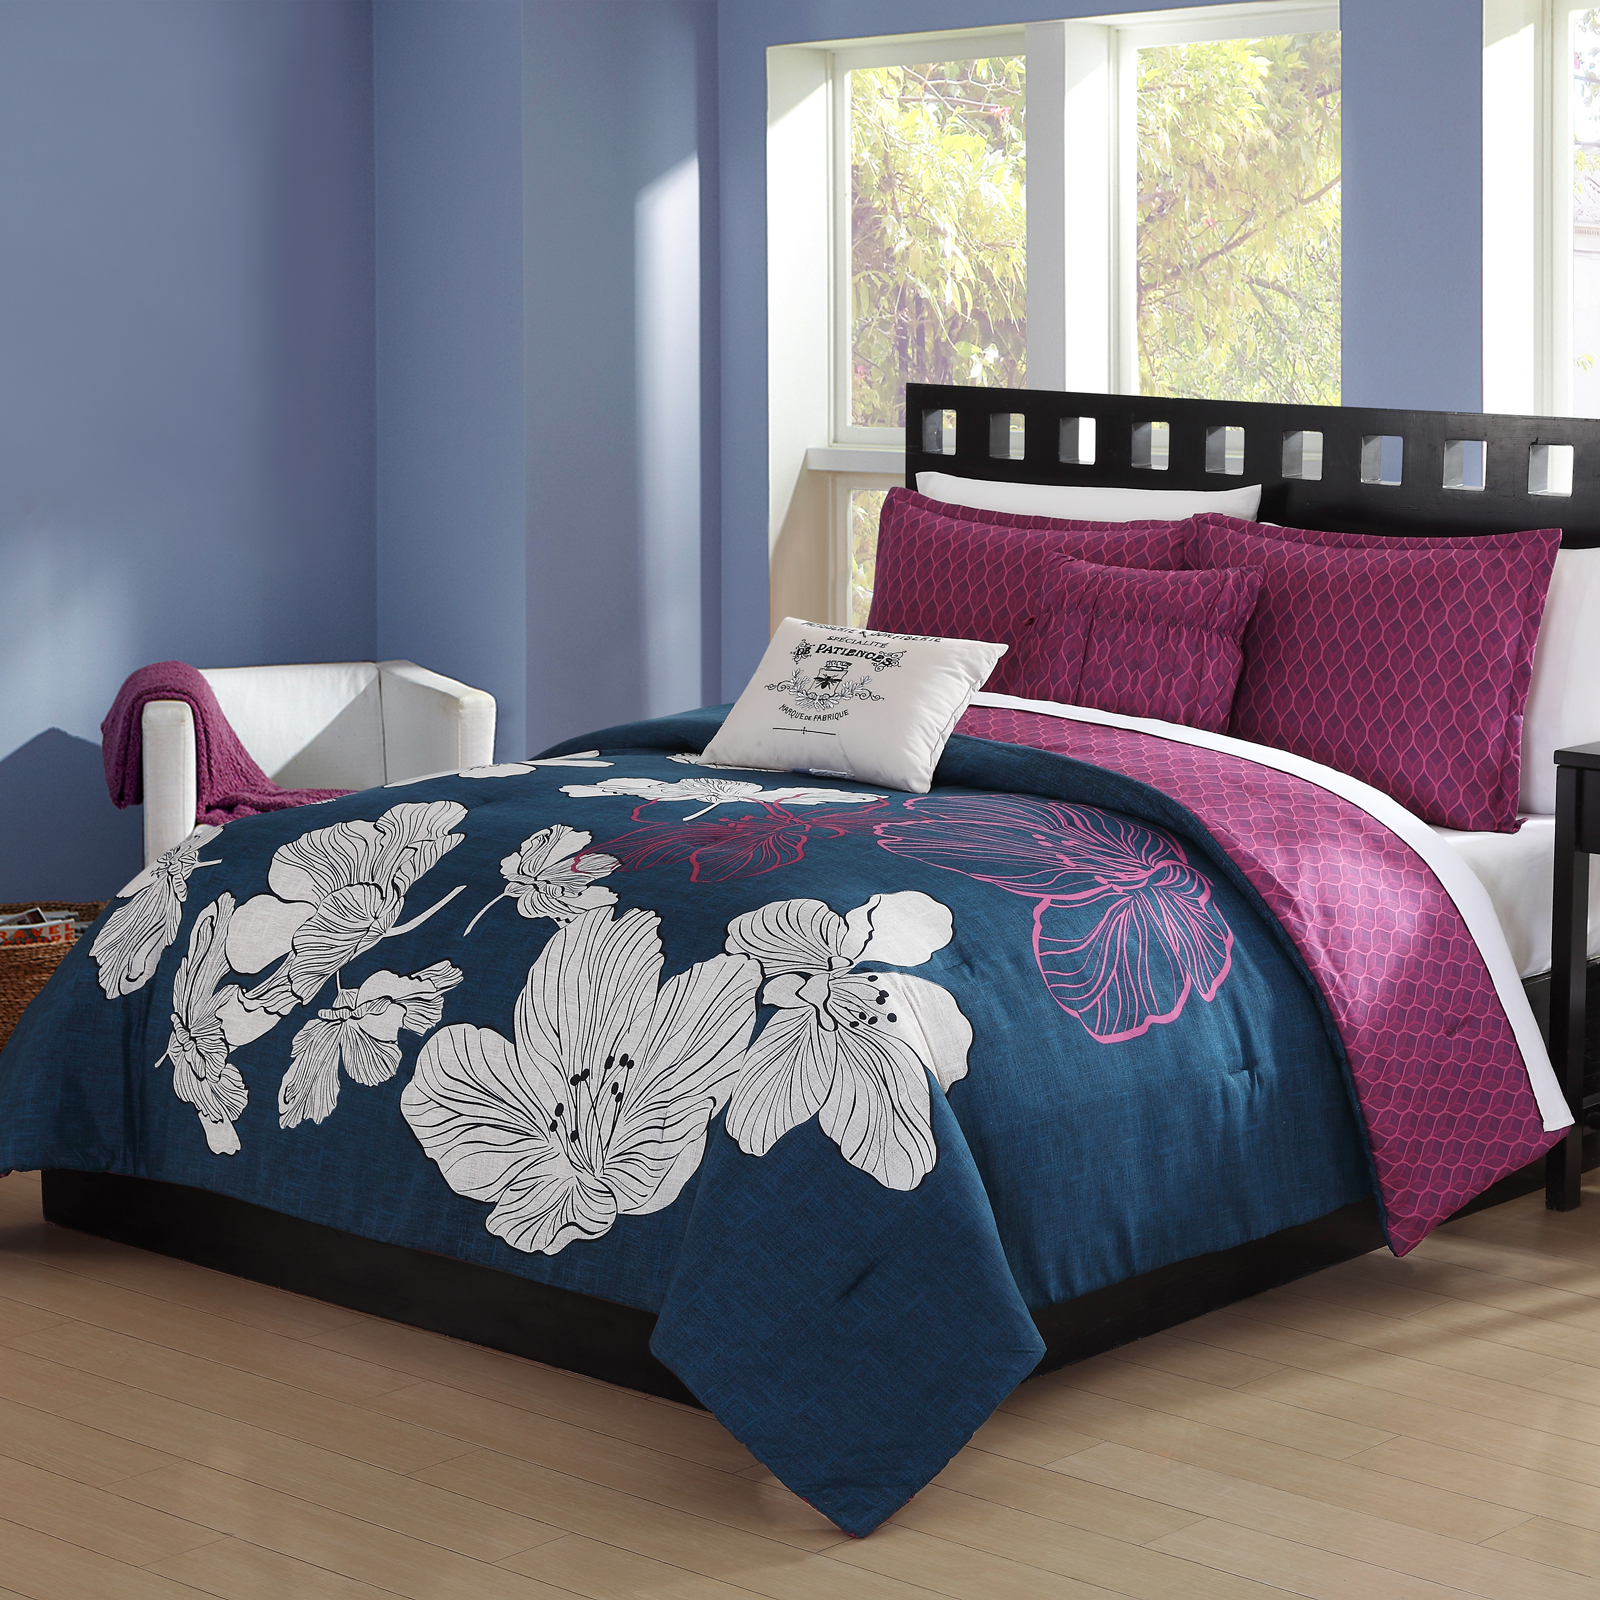 Colormate 5 Piece Comforter Set - Night Blooms